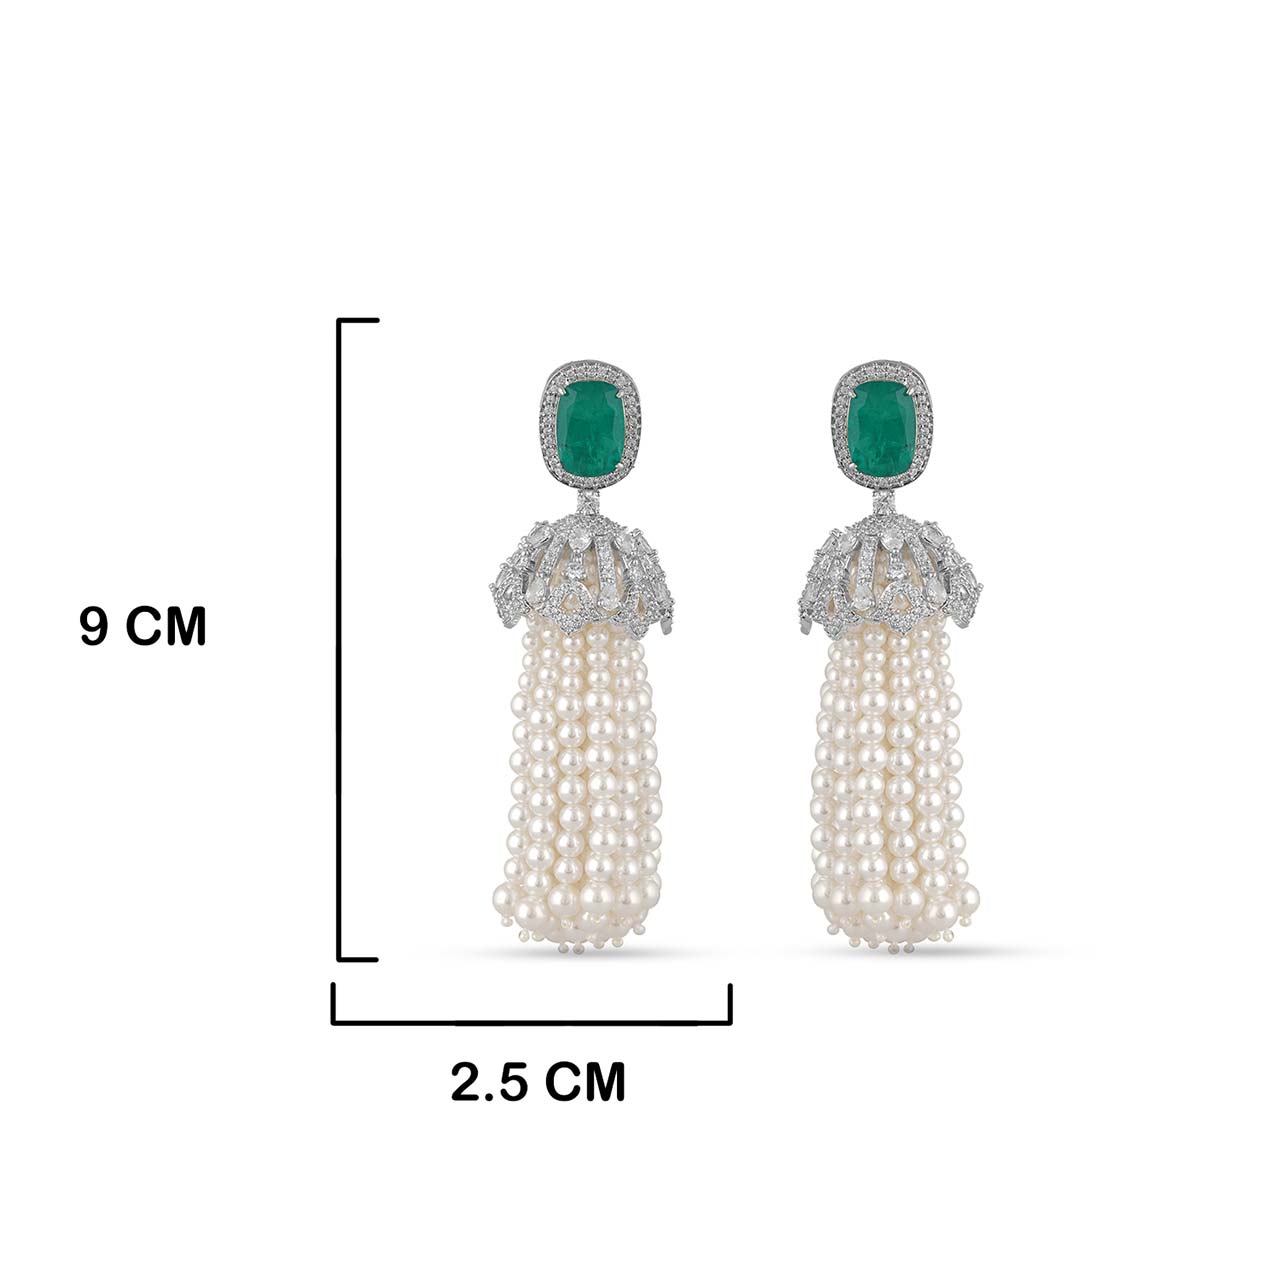 Emerald Green Pearl Drop Earrings with Measurements in cm